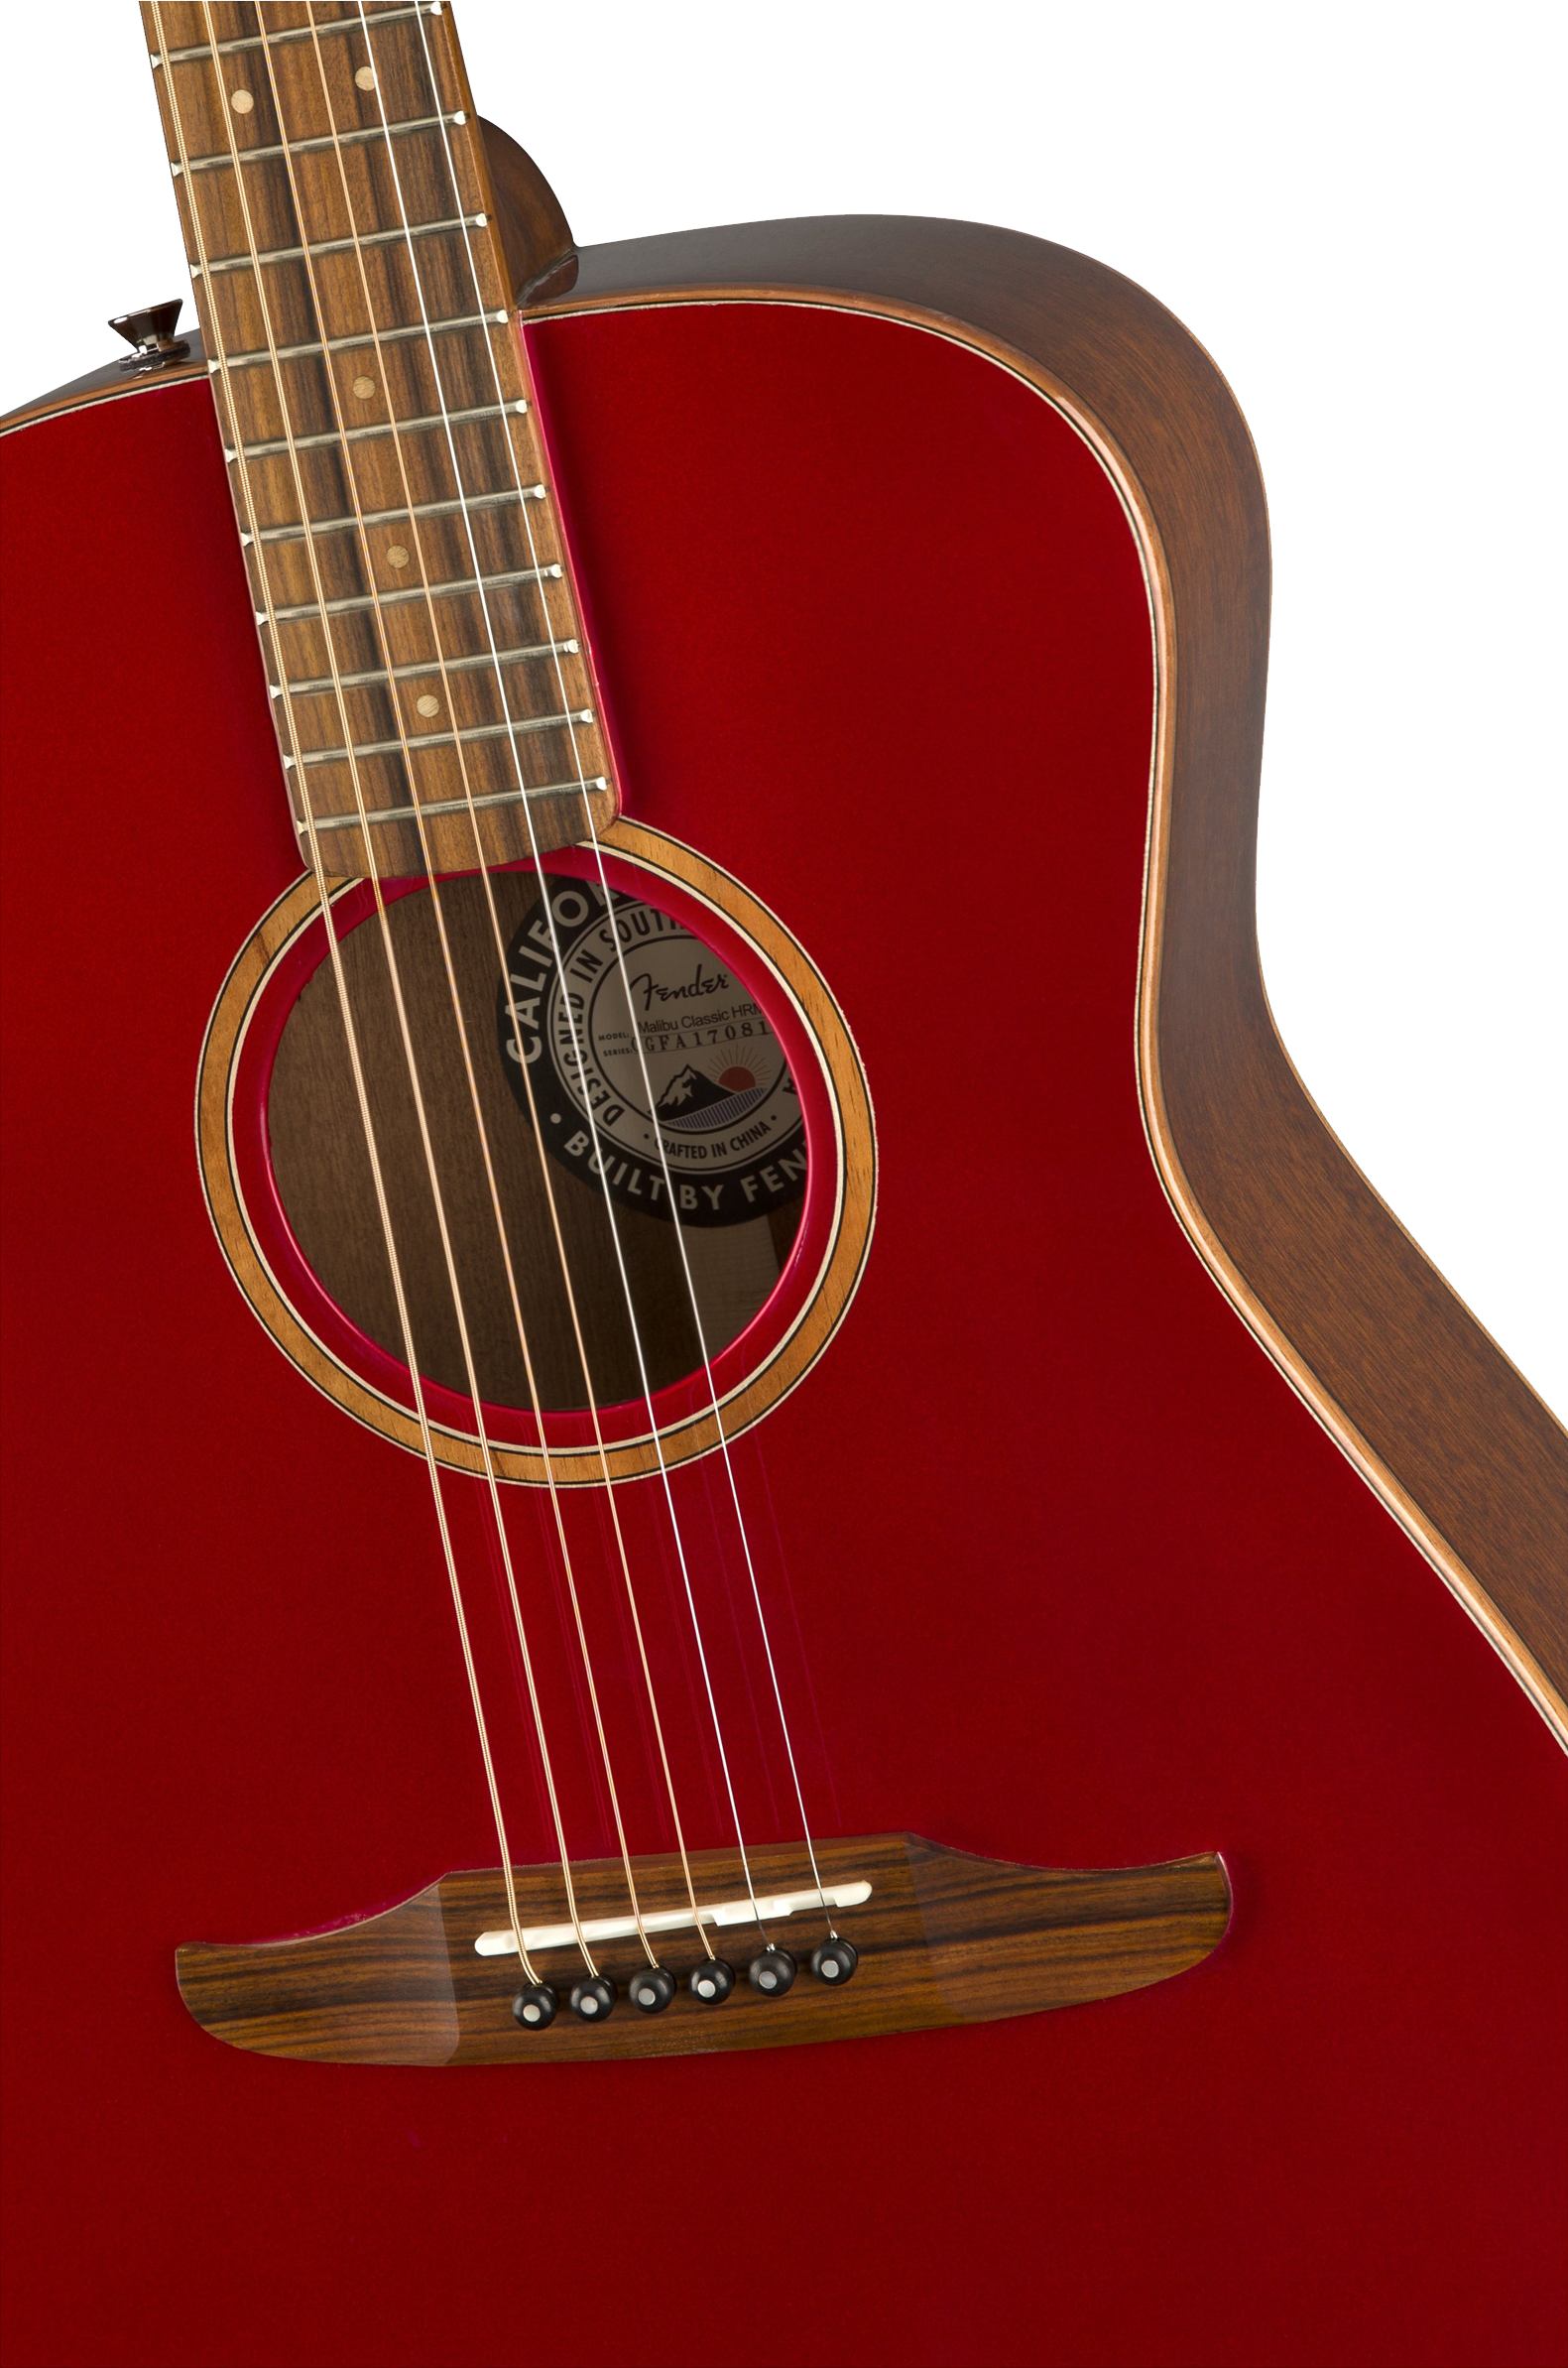 Fender Malibu Classic Acoustic / Electric Guitar - Hot Rod Red Metallic